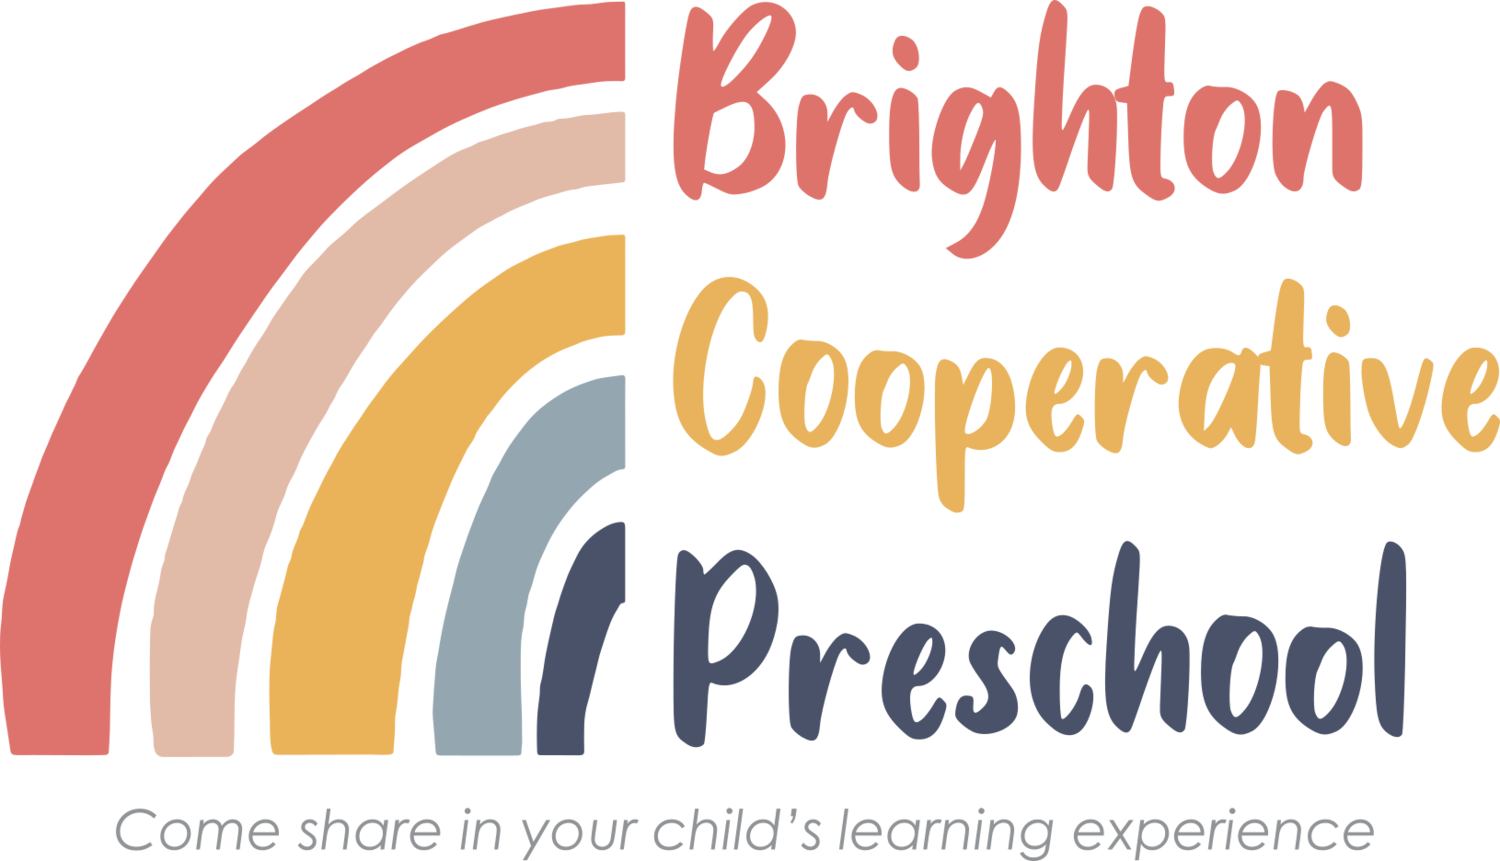 Brighton Cooperative Preschool